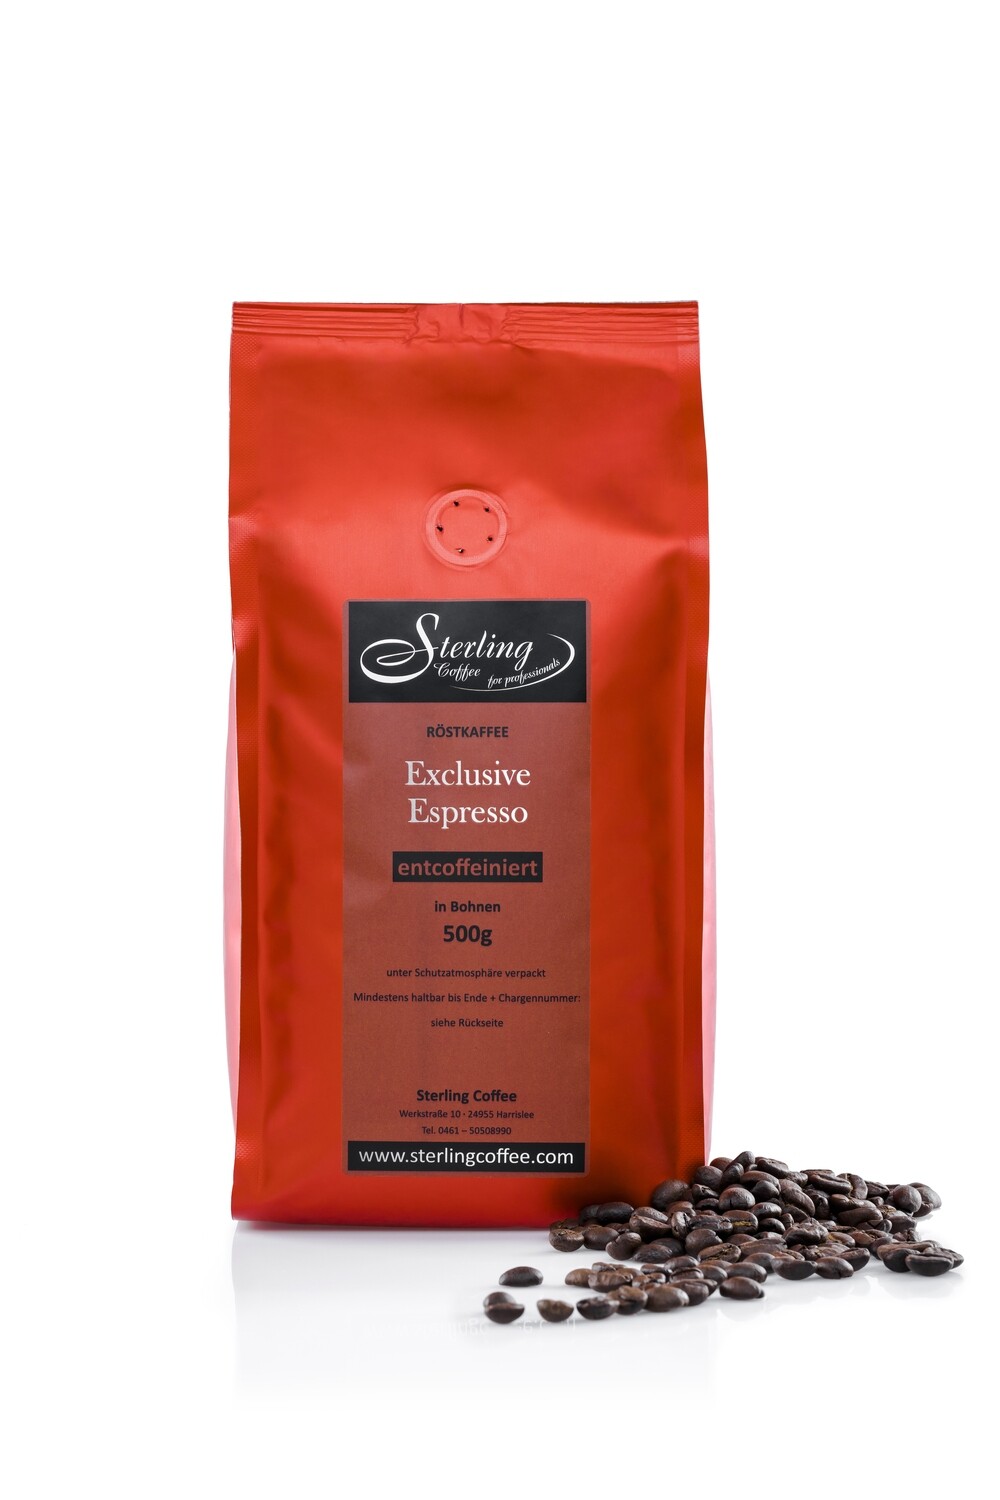 Sterling Coffee Exclusive Espresso, entcoffeiniert
ganze Bohne, 500g ⭐️⭐️⭐️⭐️⭐️